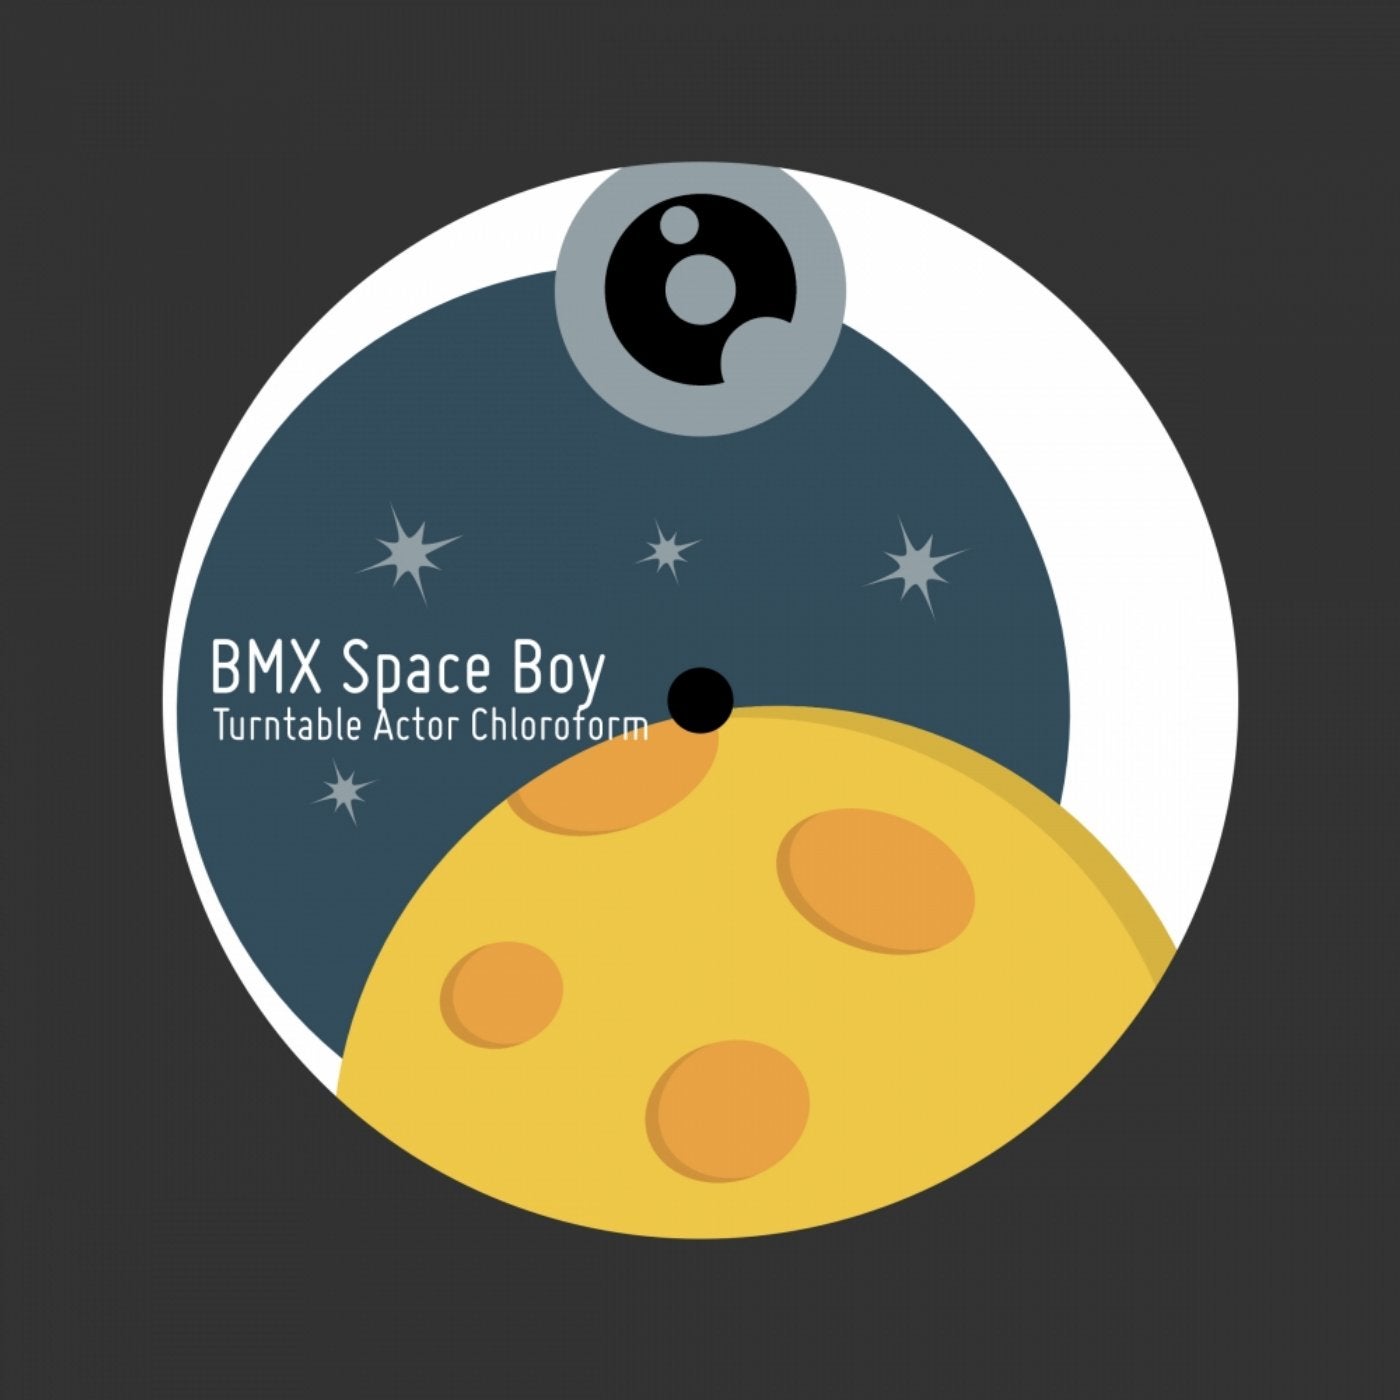 BMX Space Boy